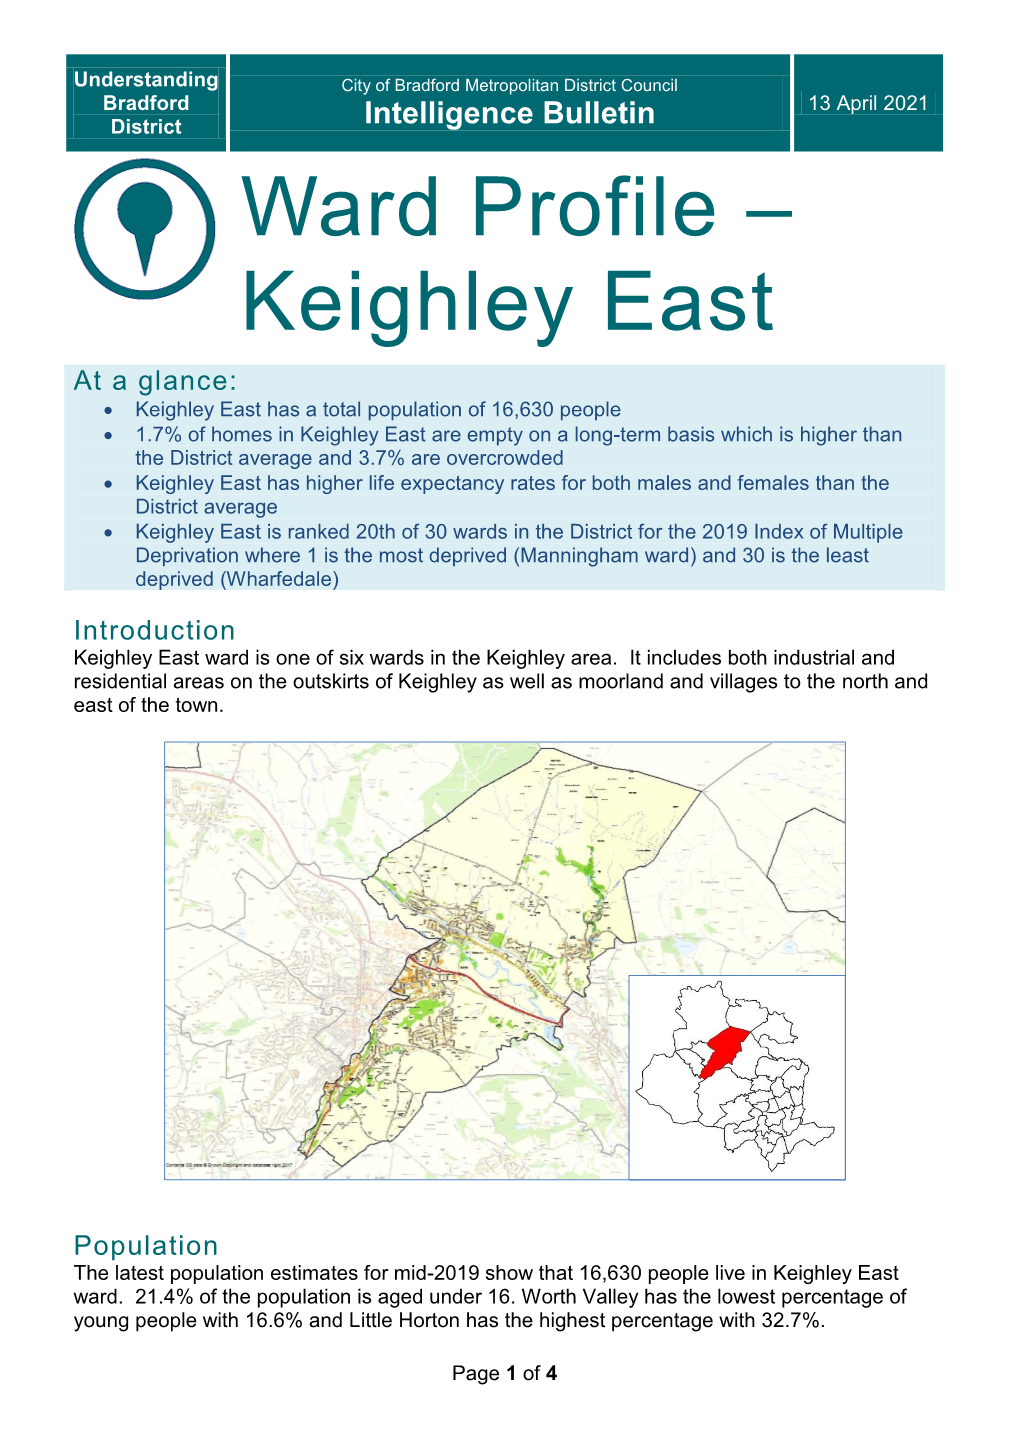 Keighley East